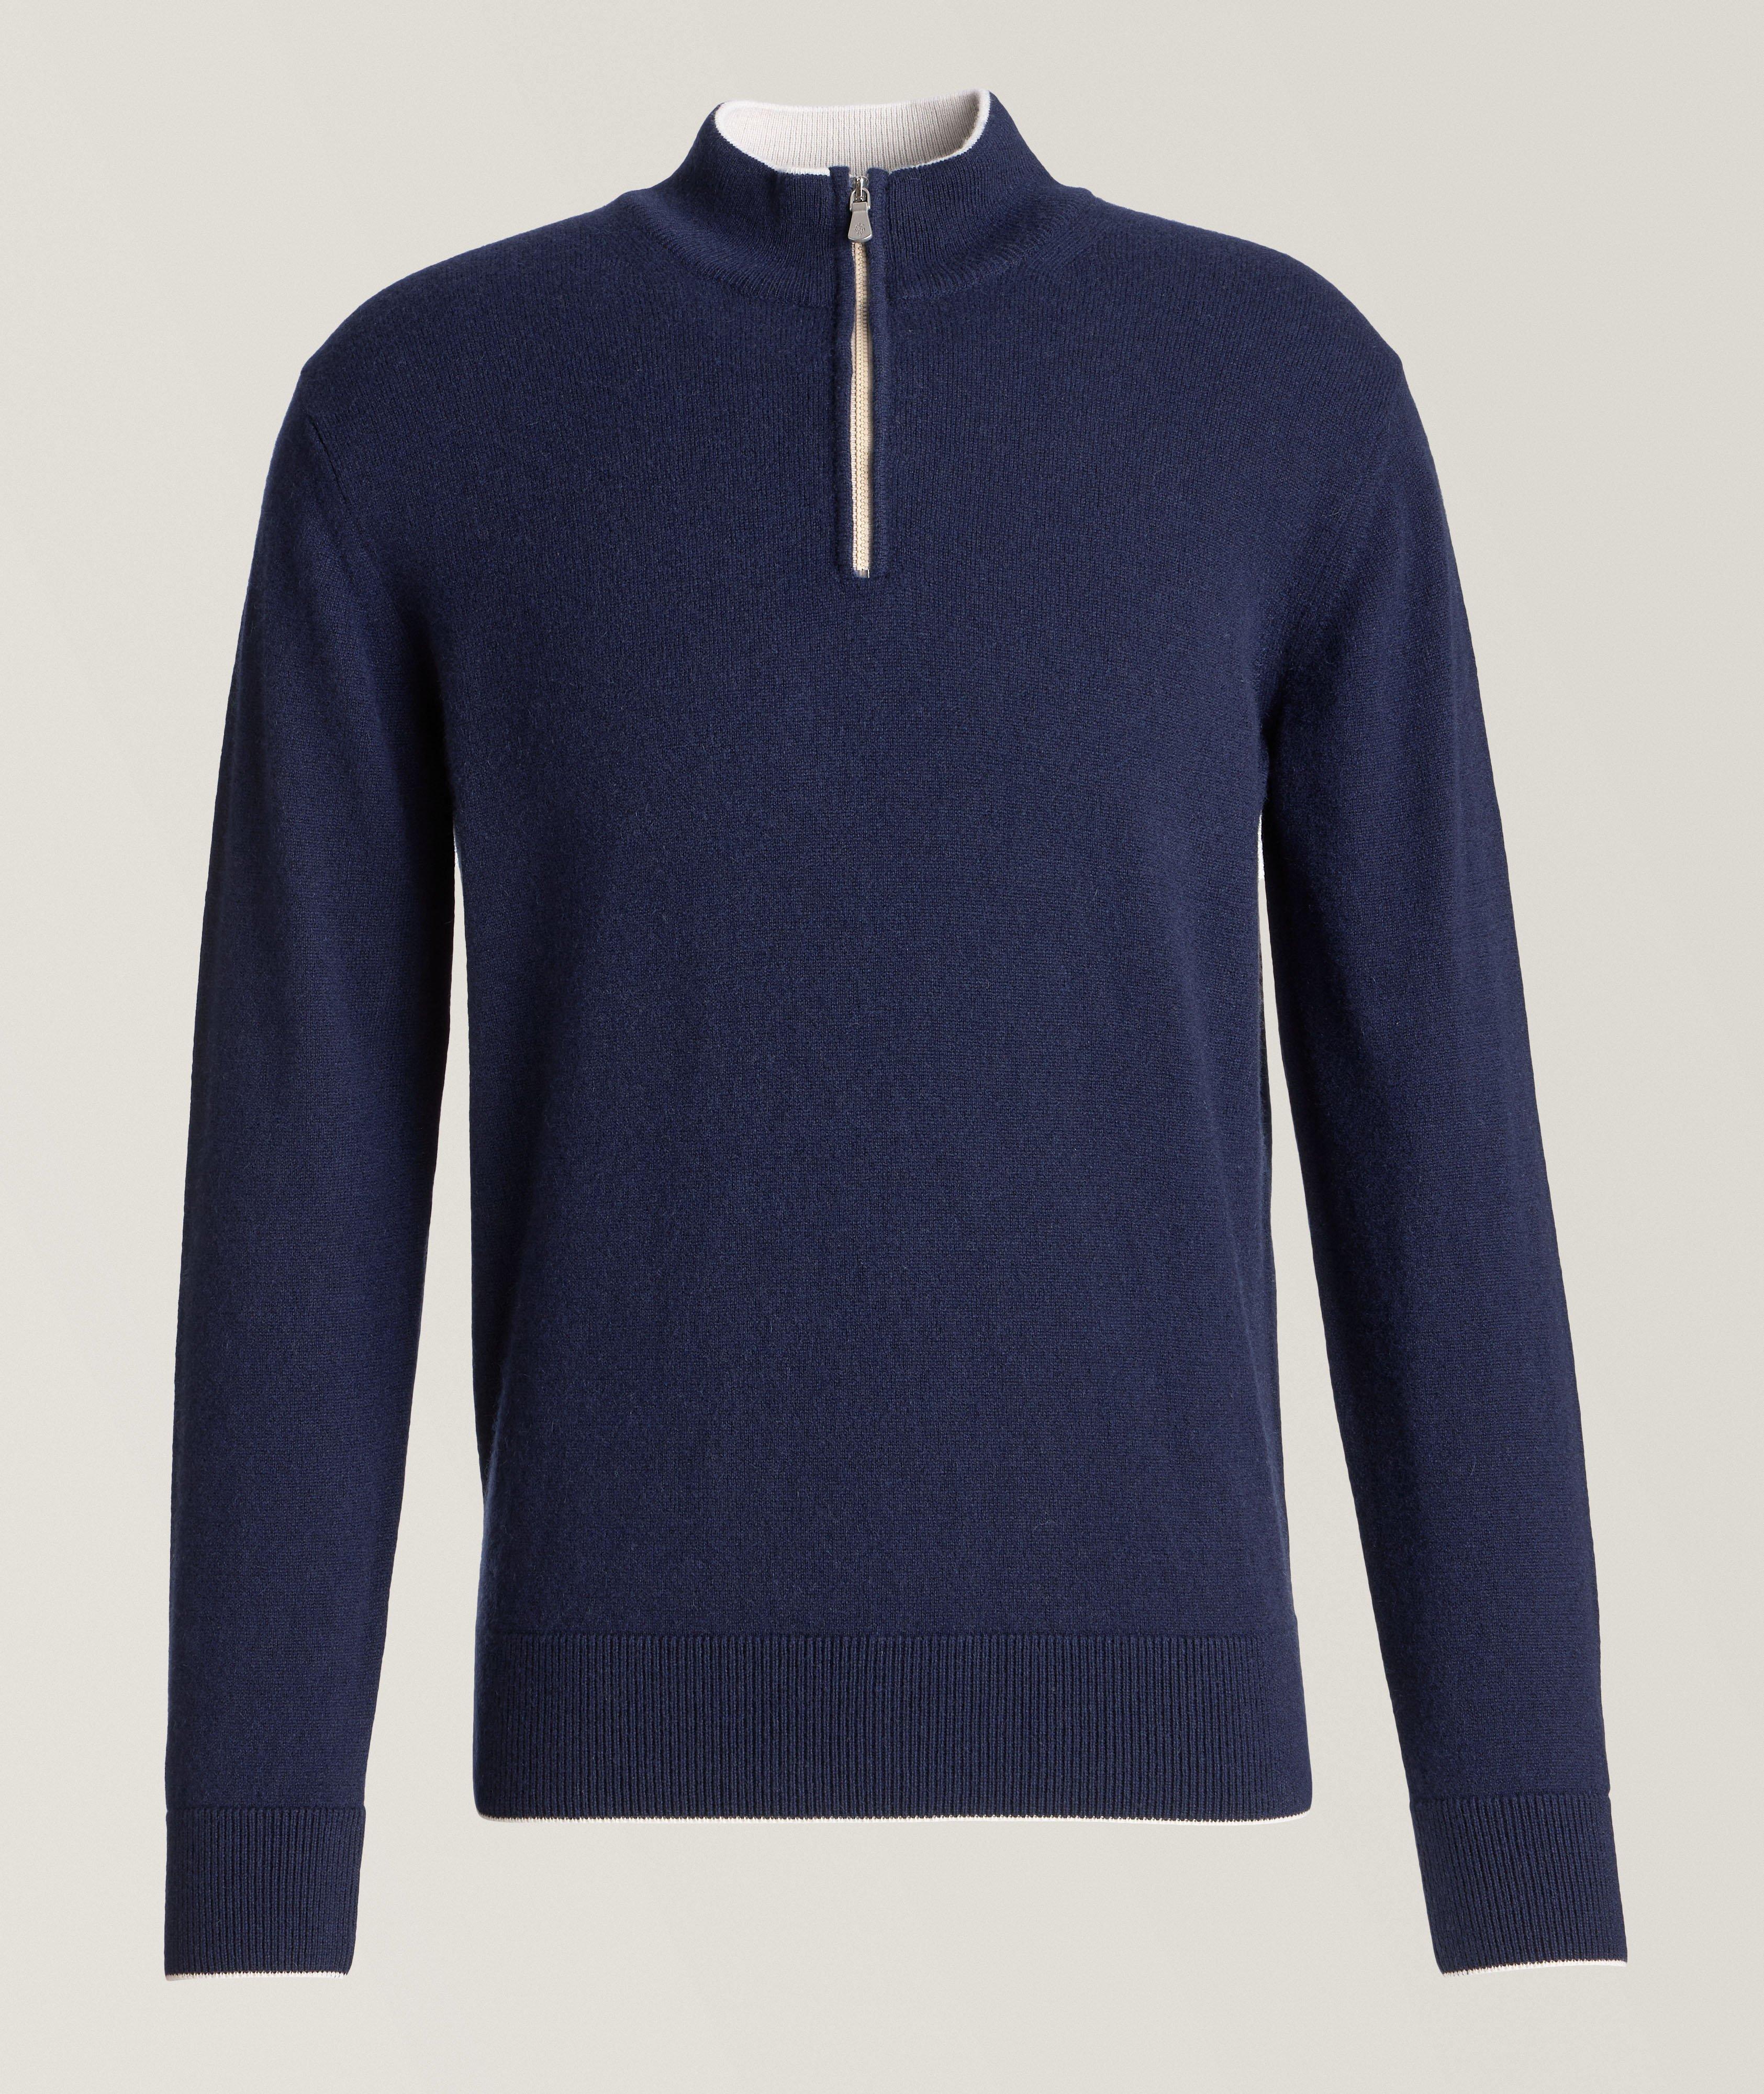 Cashmere Quarter-Zip Sweater image 0